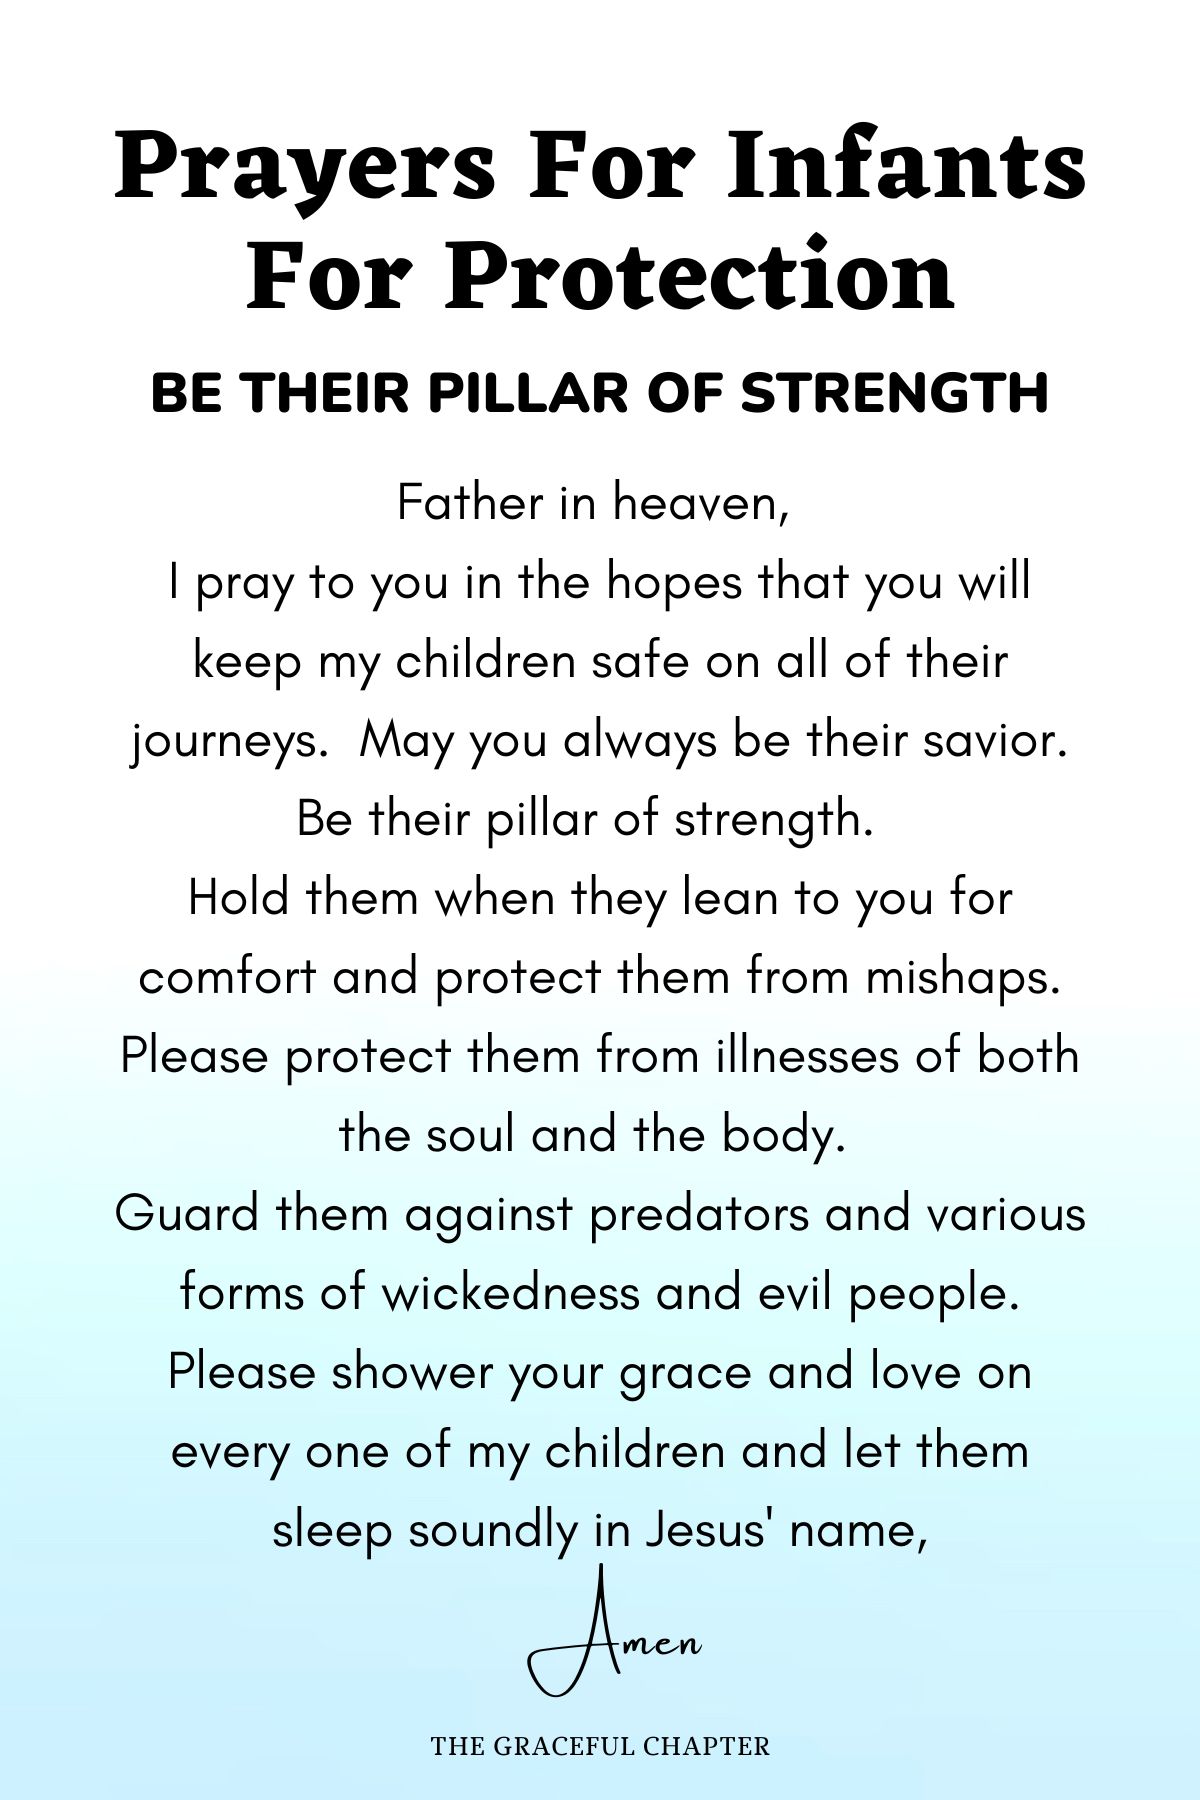 Be their pillar of strength